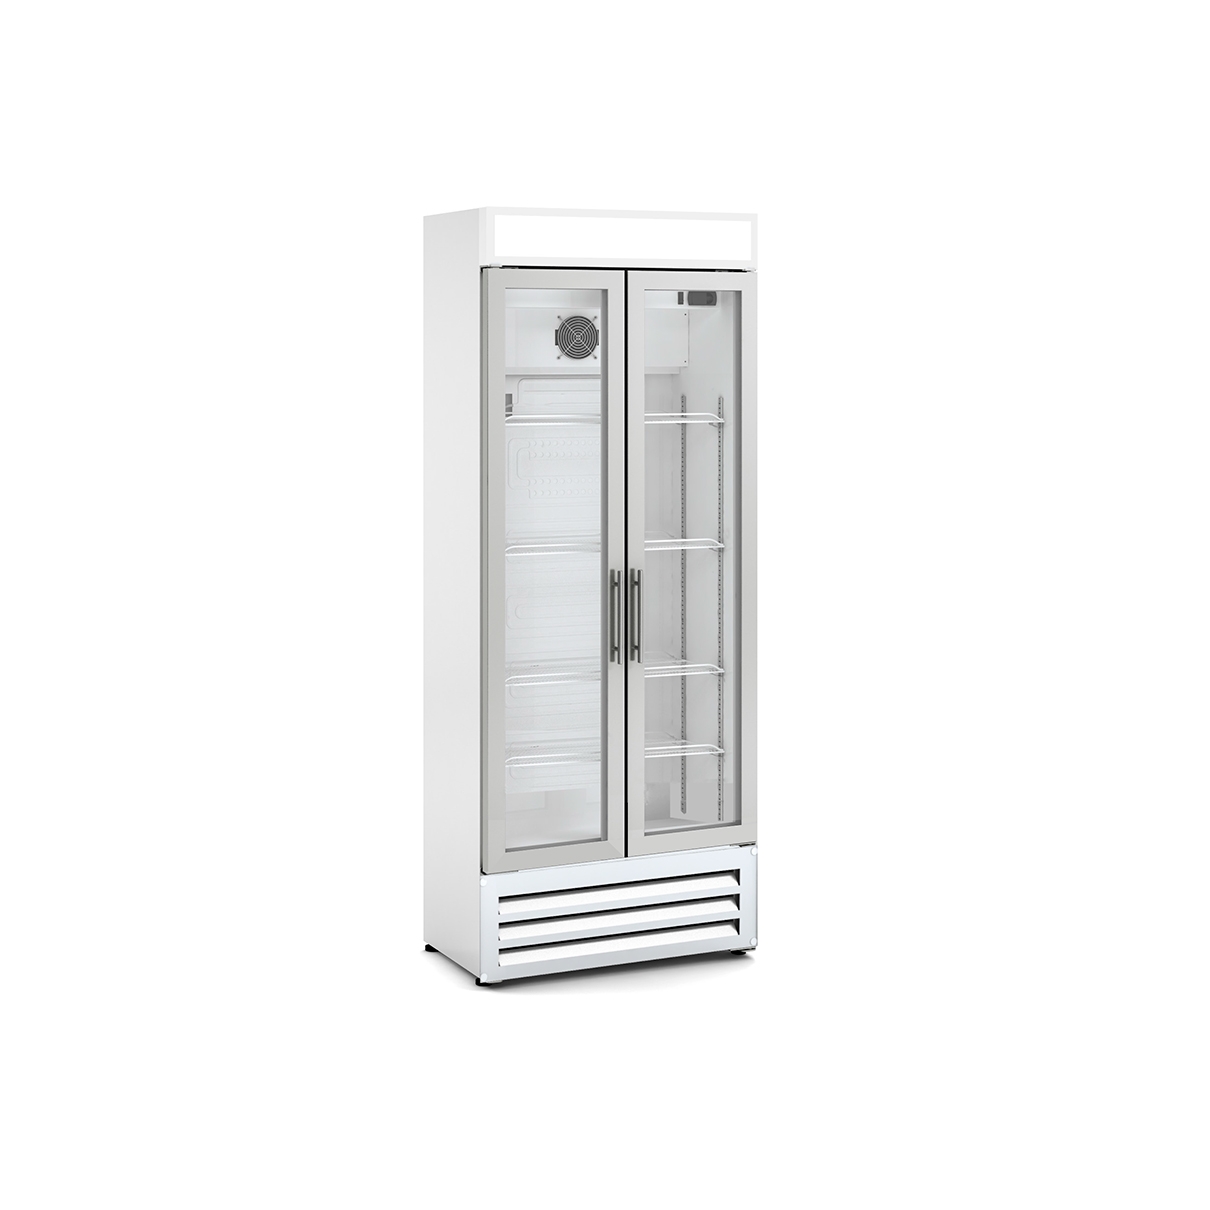 Vertical Refrigerated Display DECVAR-23